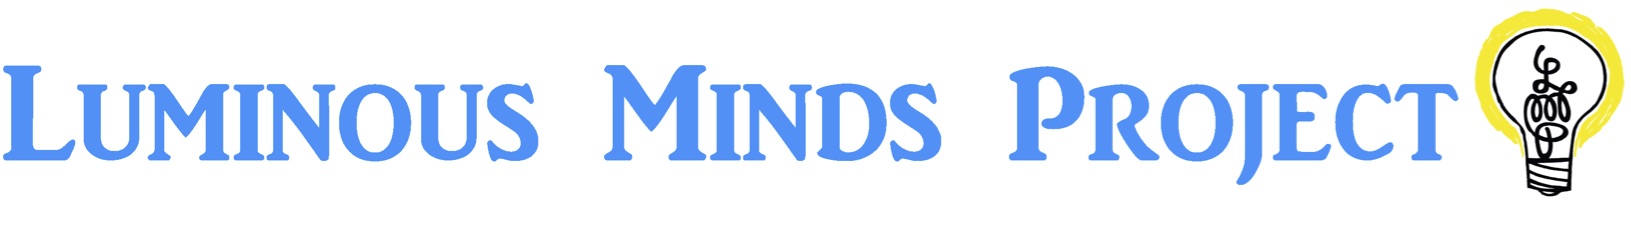 Luminous Minds Project logo